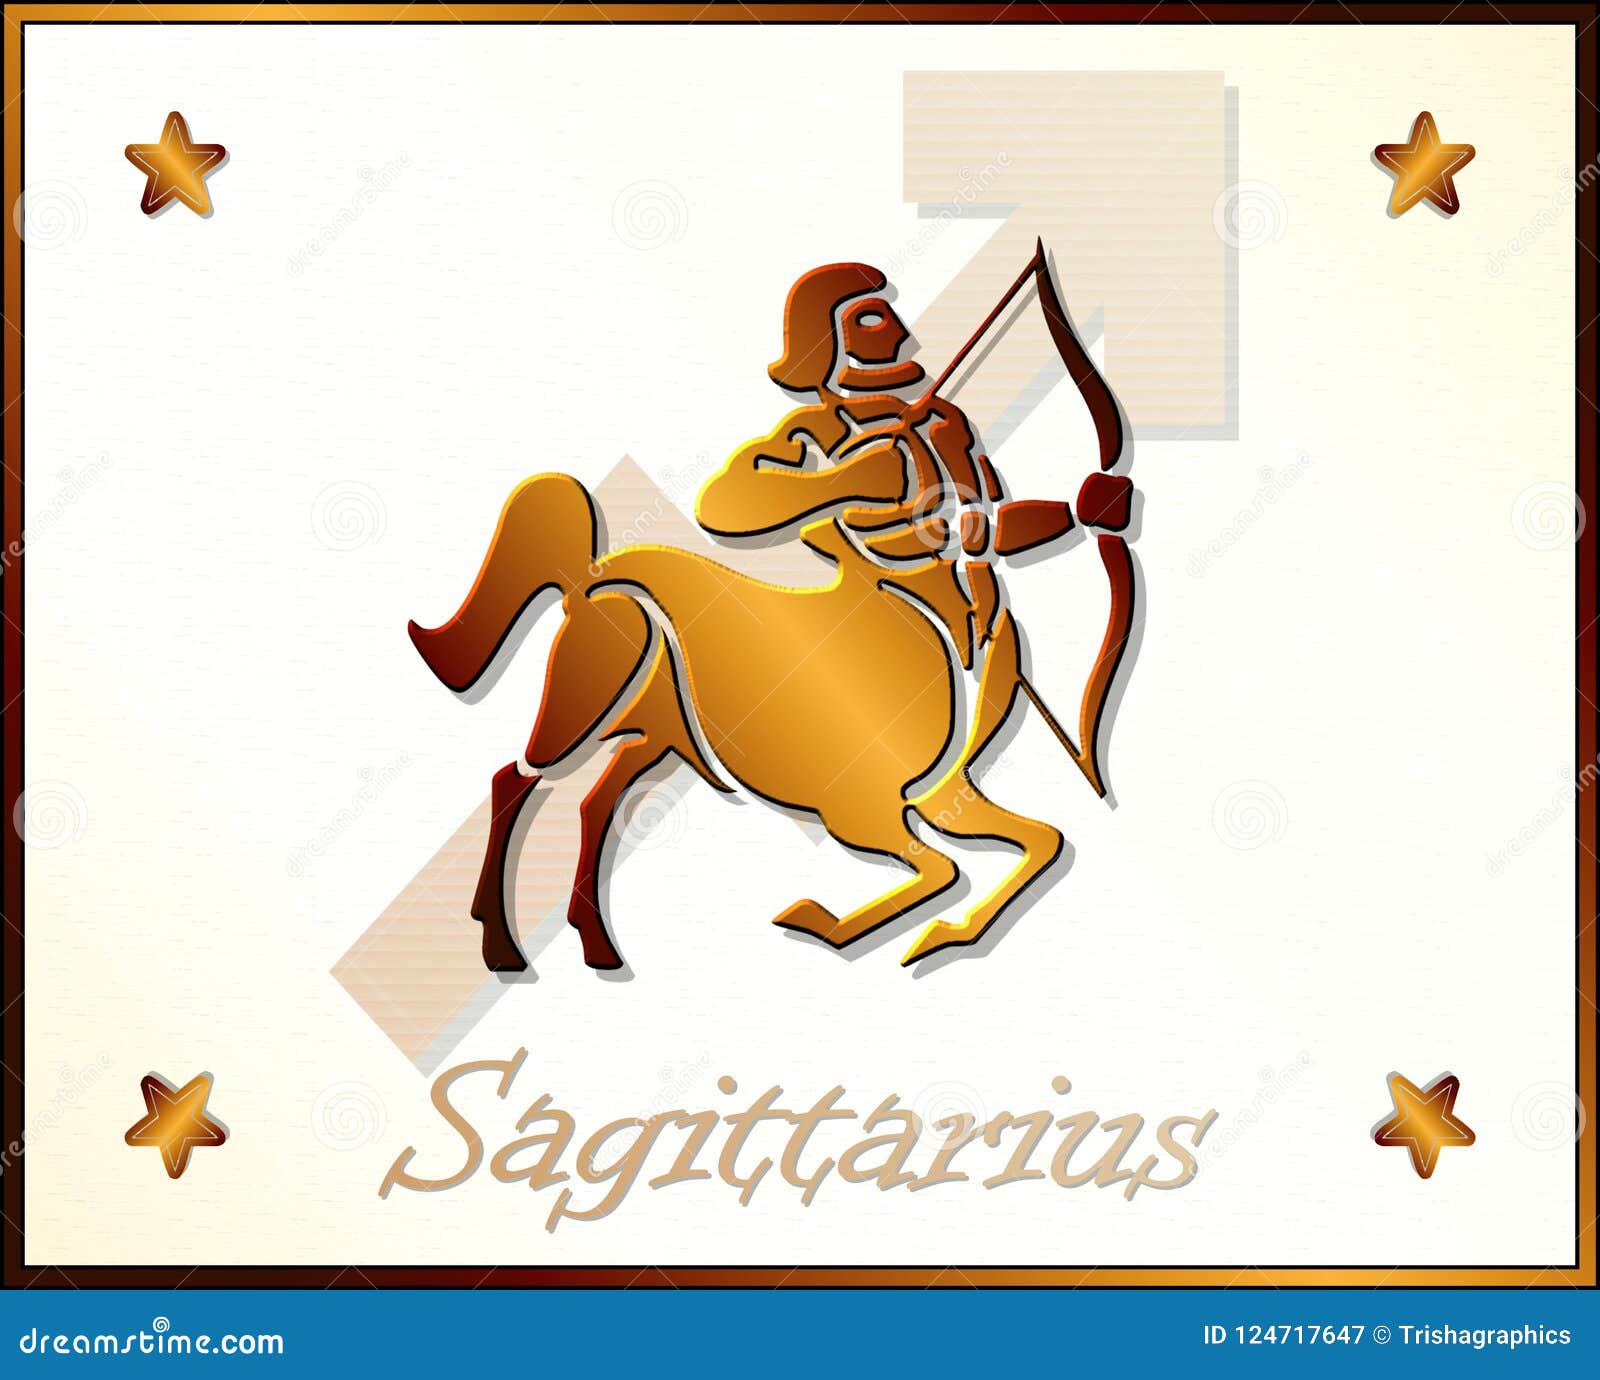 sagittarius zodiac star sign